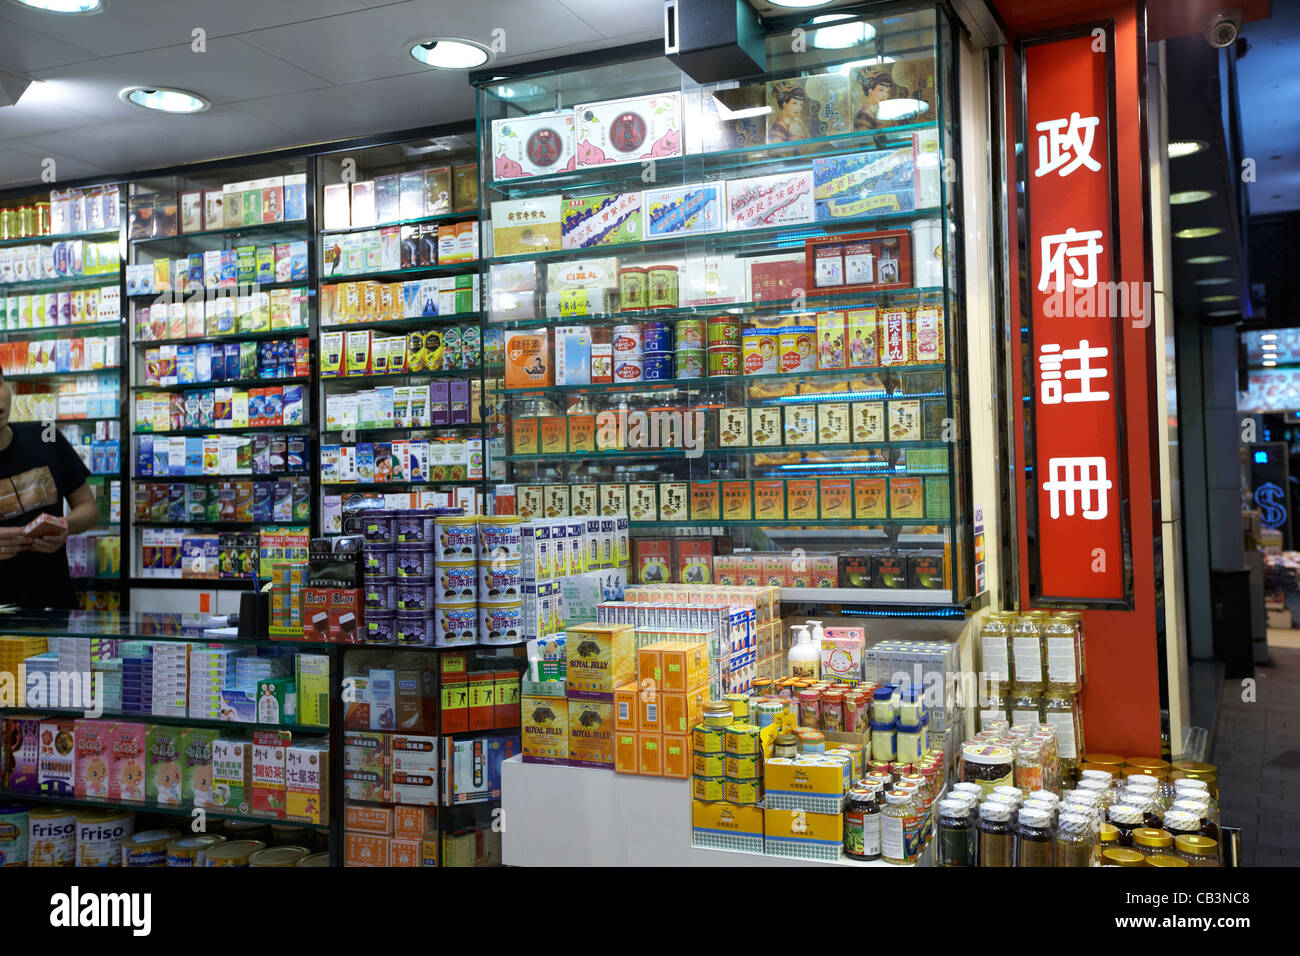 Qardio Official Hong Kong Store